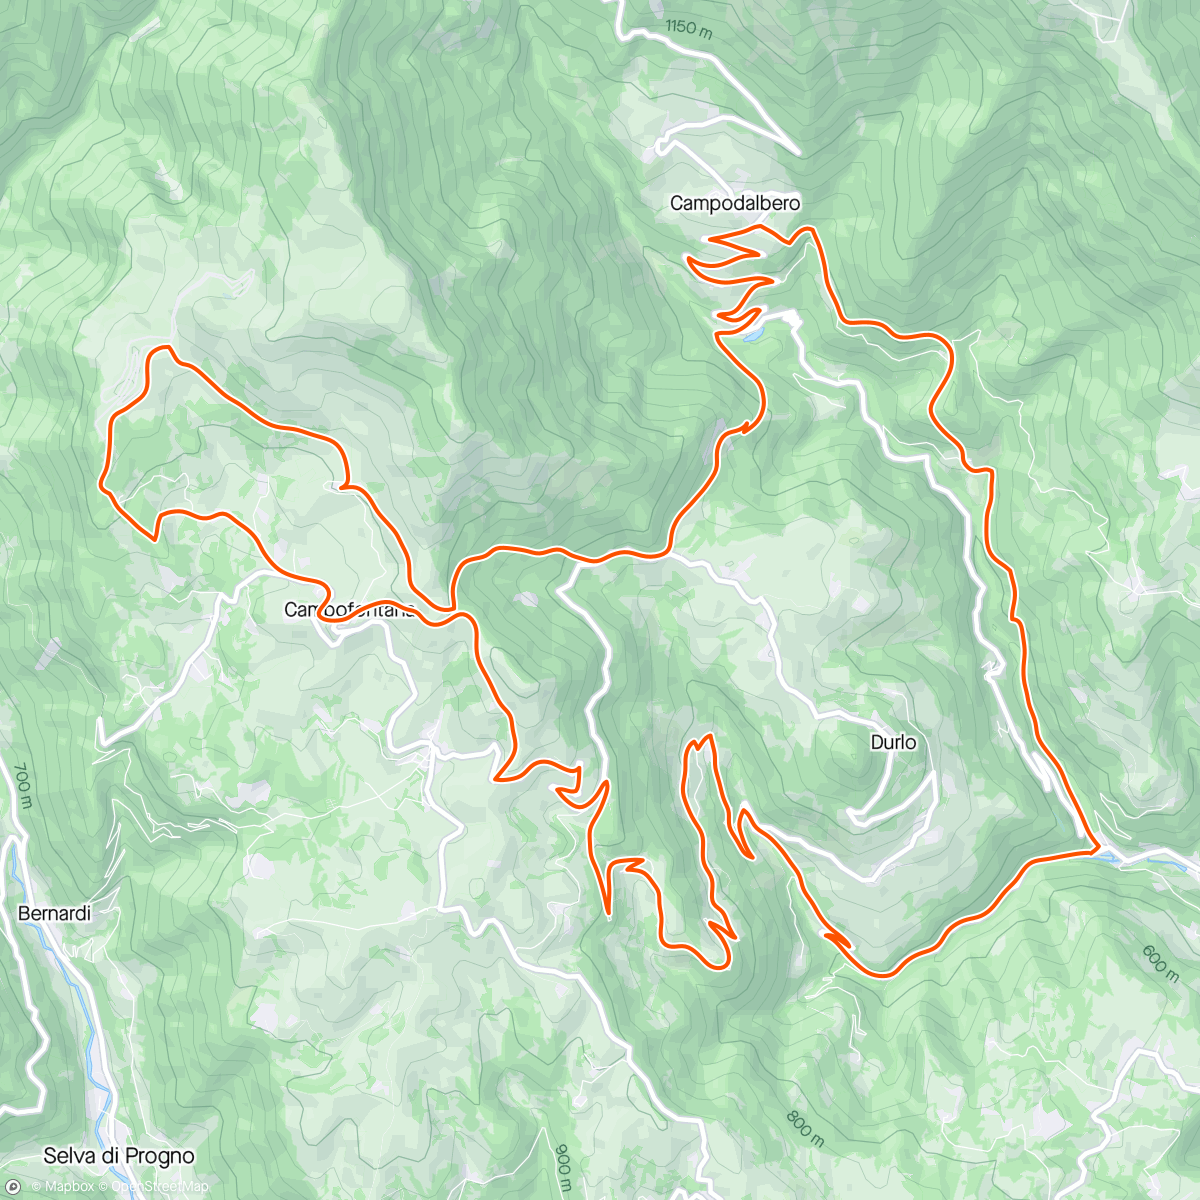 Map of the activity, Campofontana - Rif. M.te Torla - Campodalbero